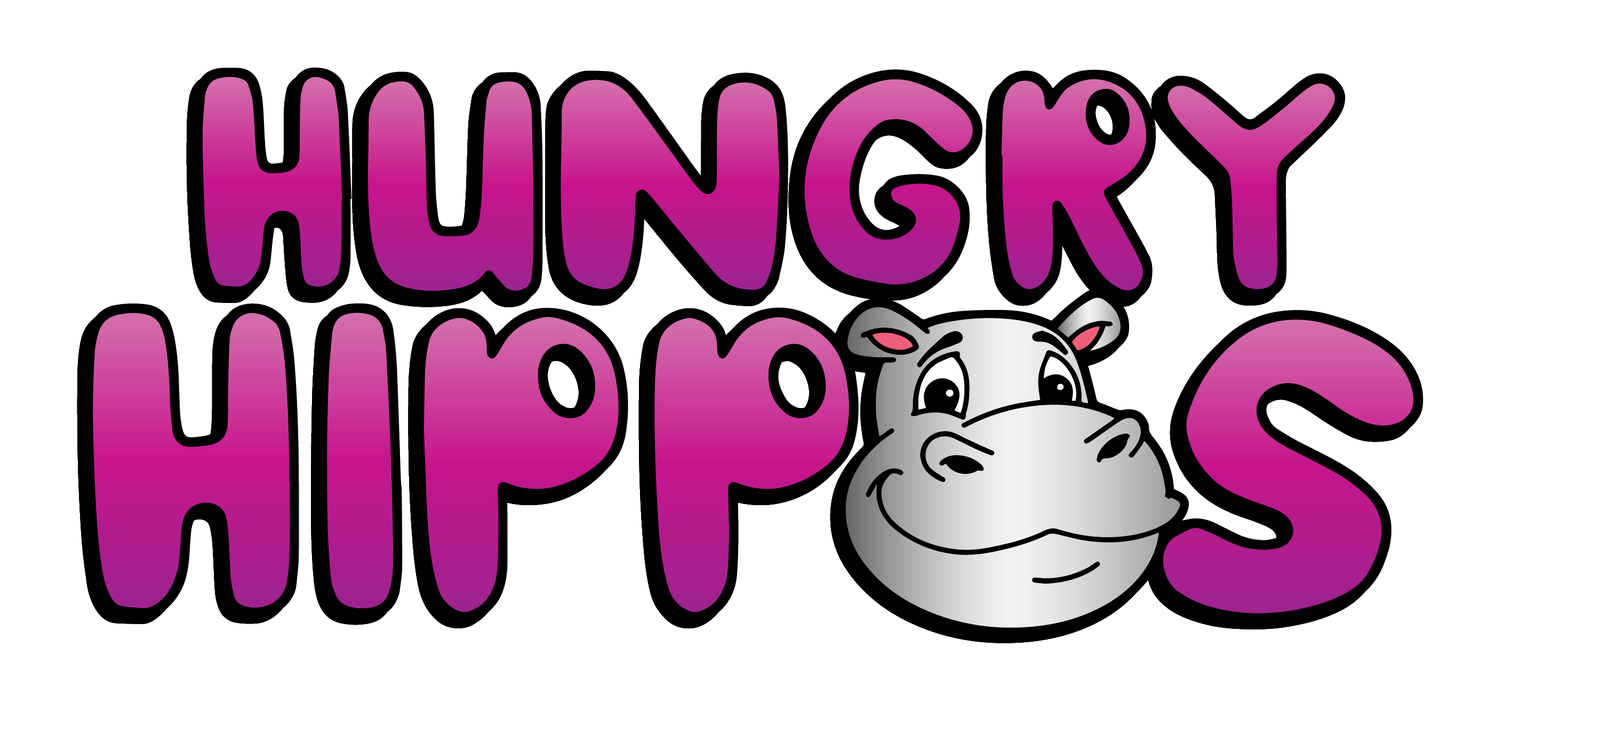 Hungry Hungry Hippos logo.